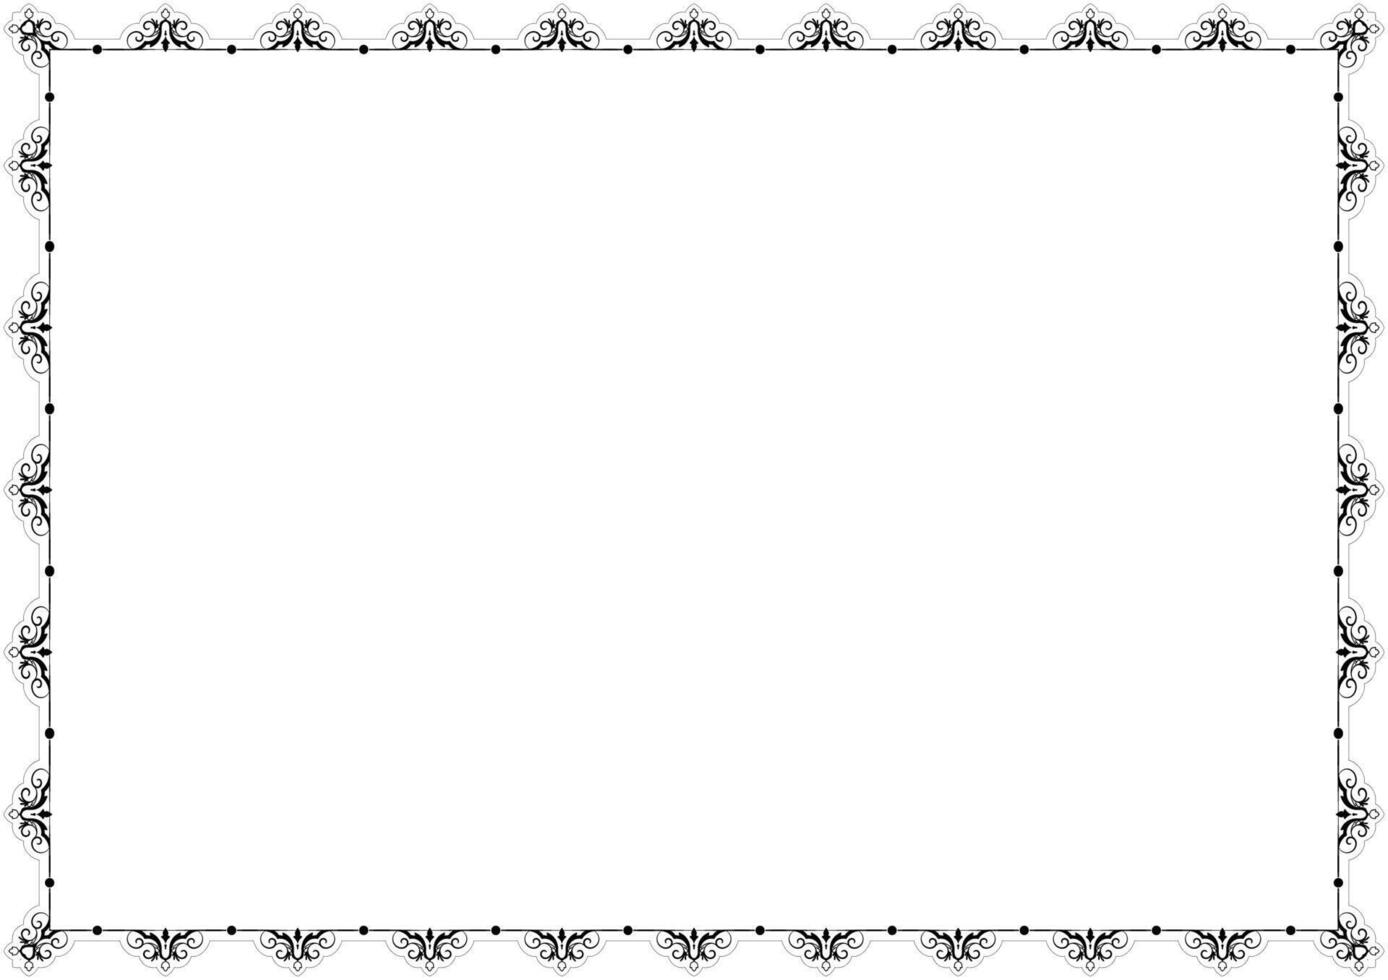 A5 frame, black vintage lines on a white background. vector